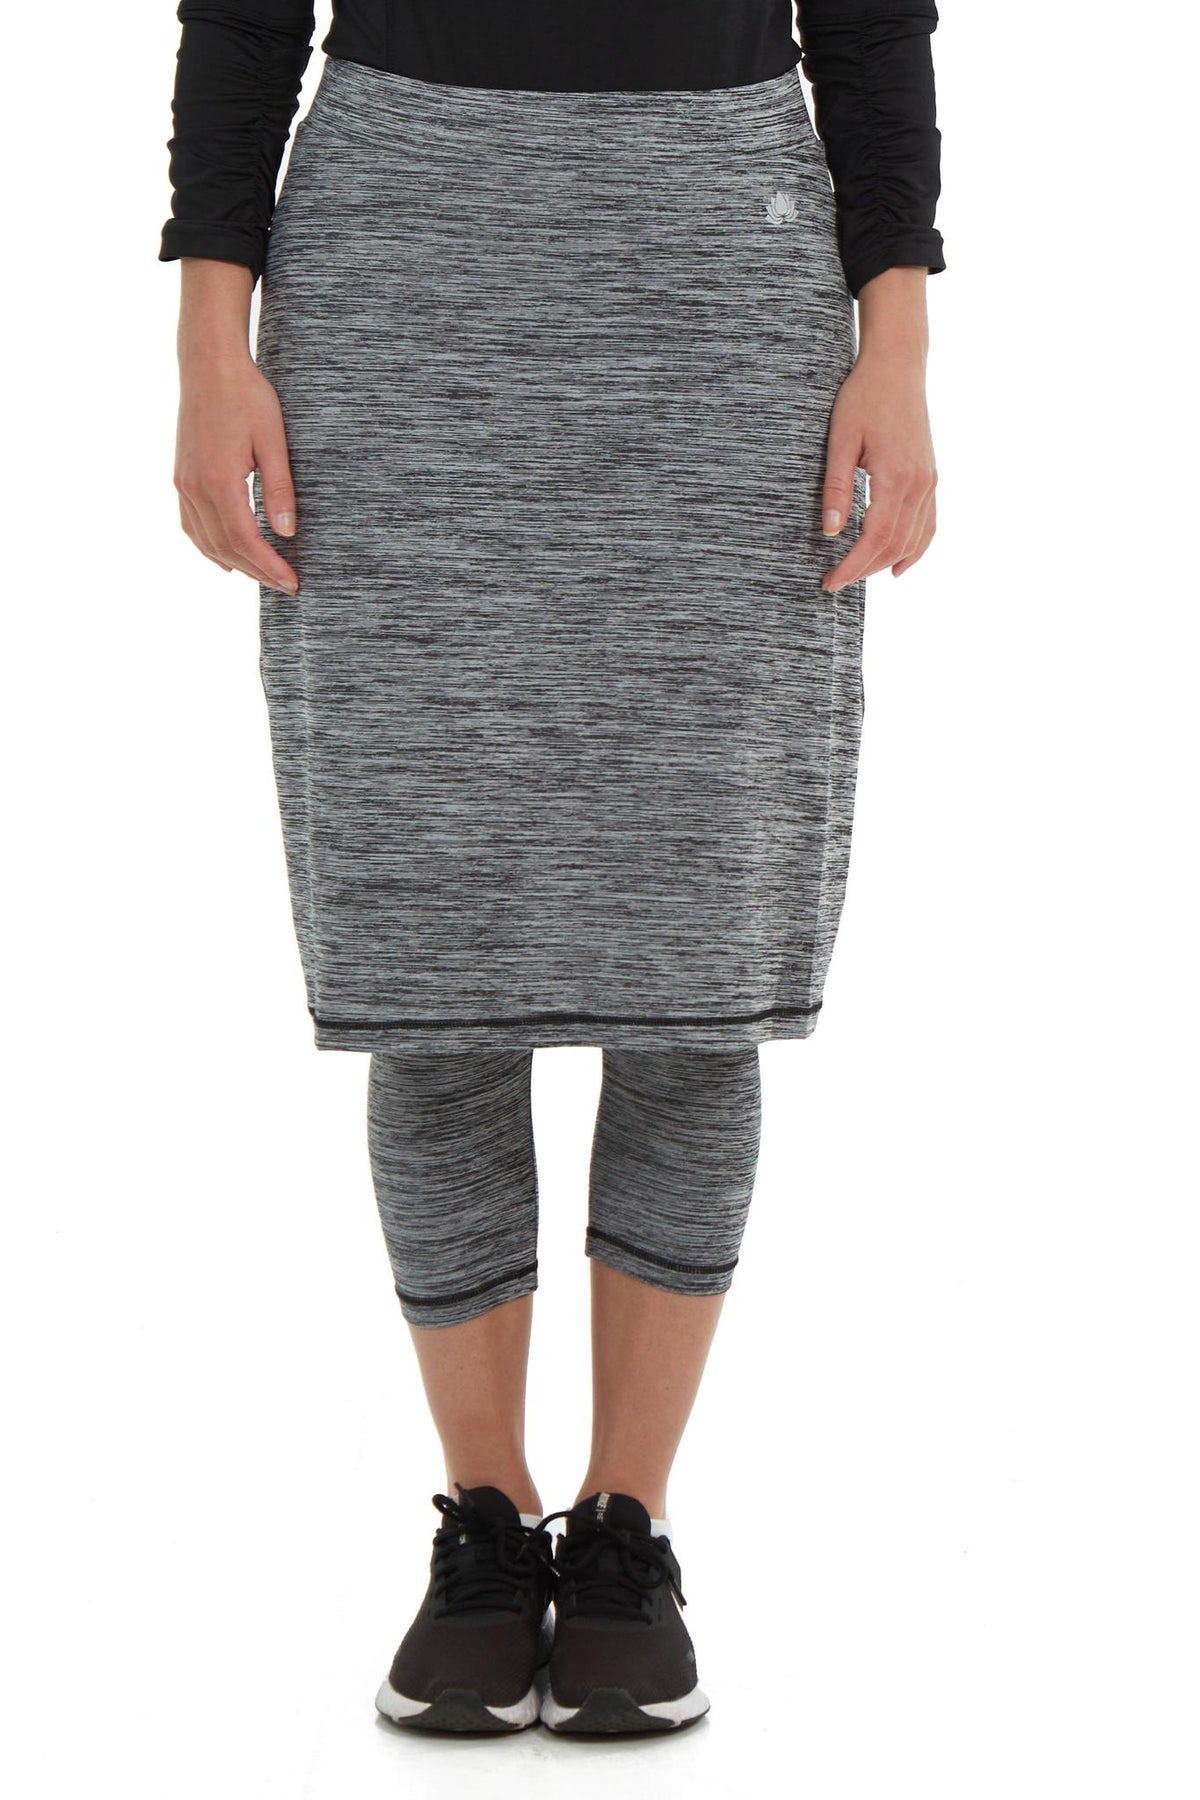 SpaceDye Snoga Athletic Skirt in Grey – Jupe De Abby